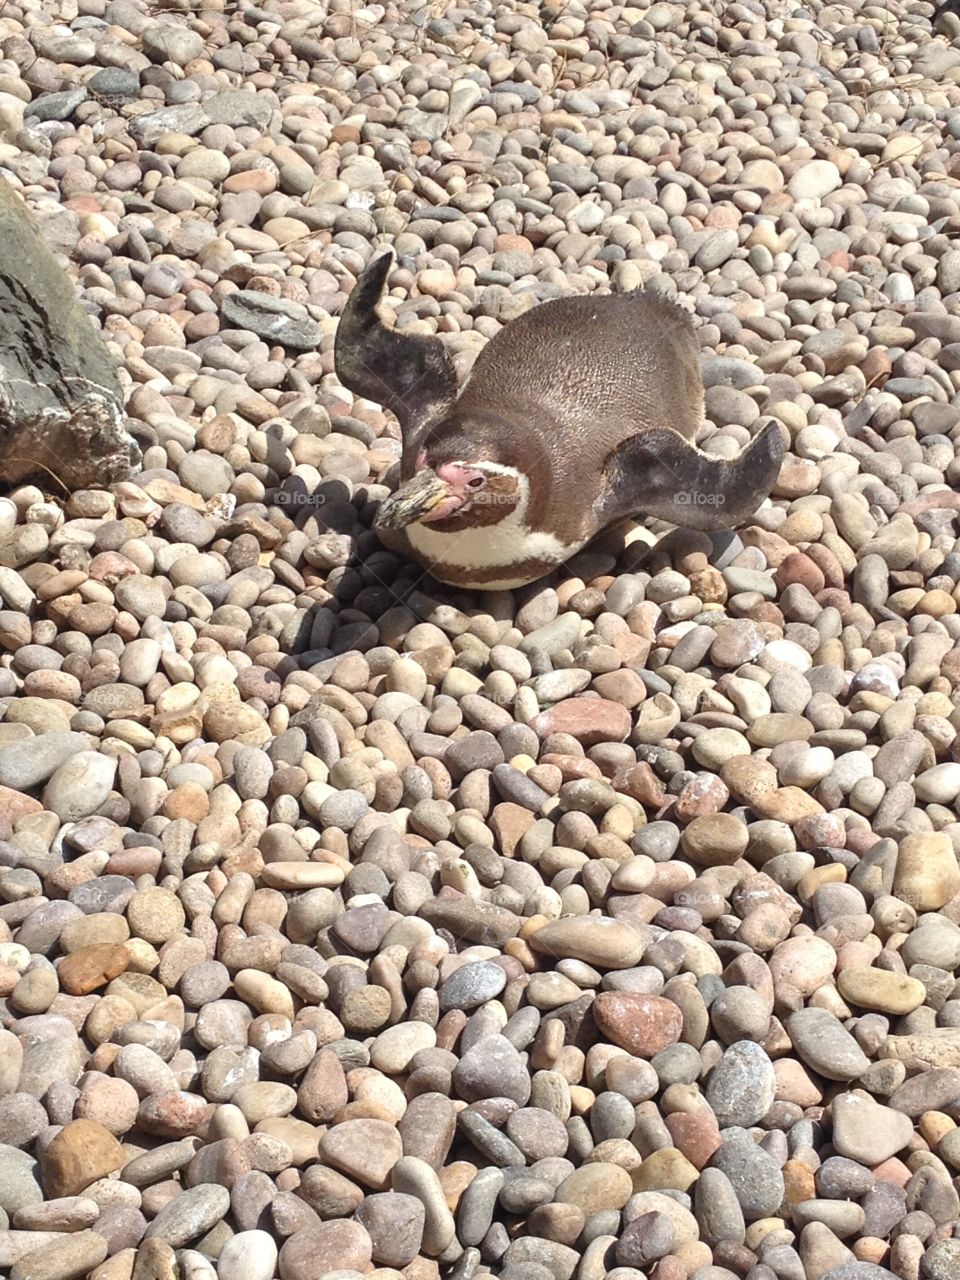 Penguin sunbathing at the zoo